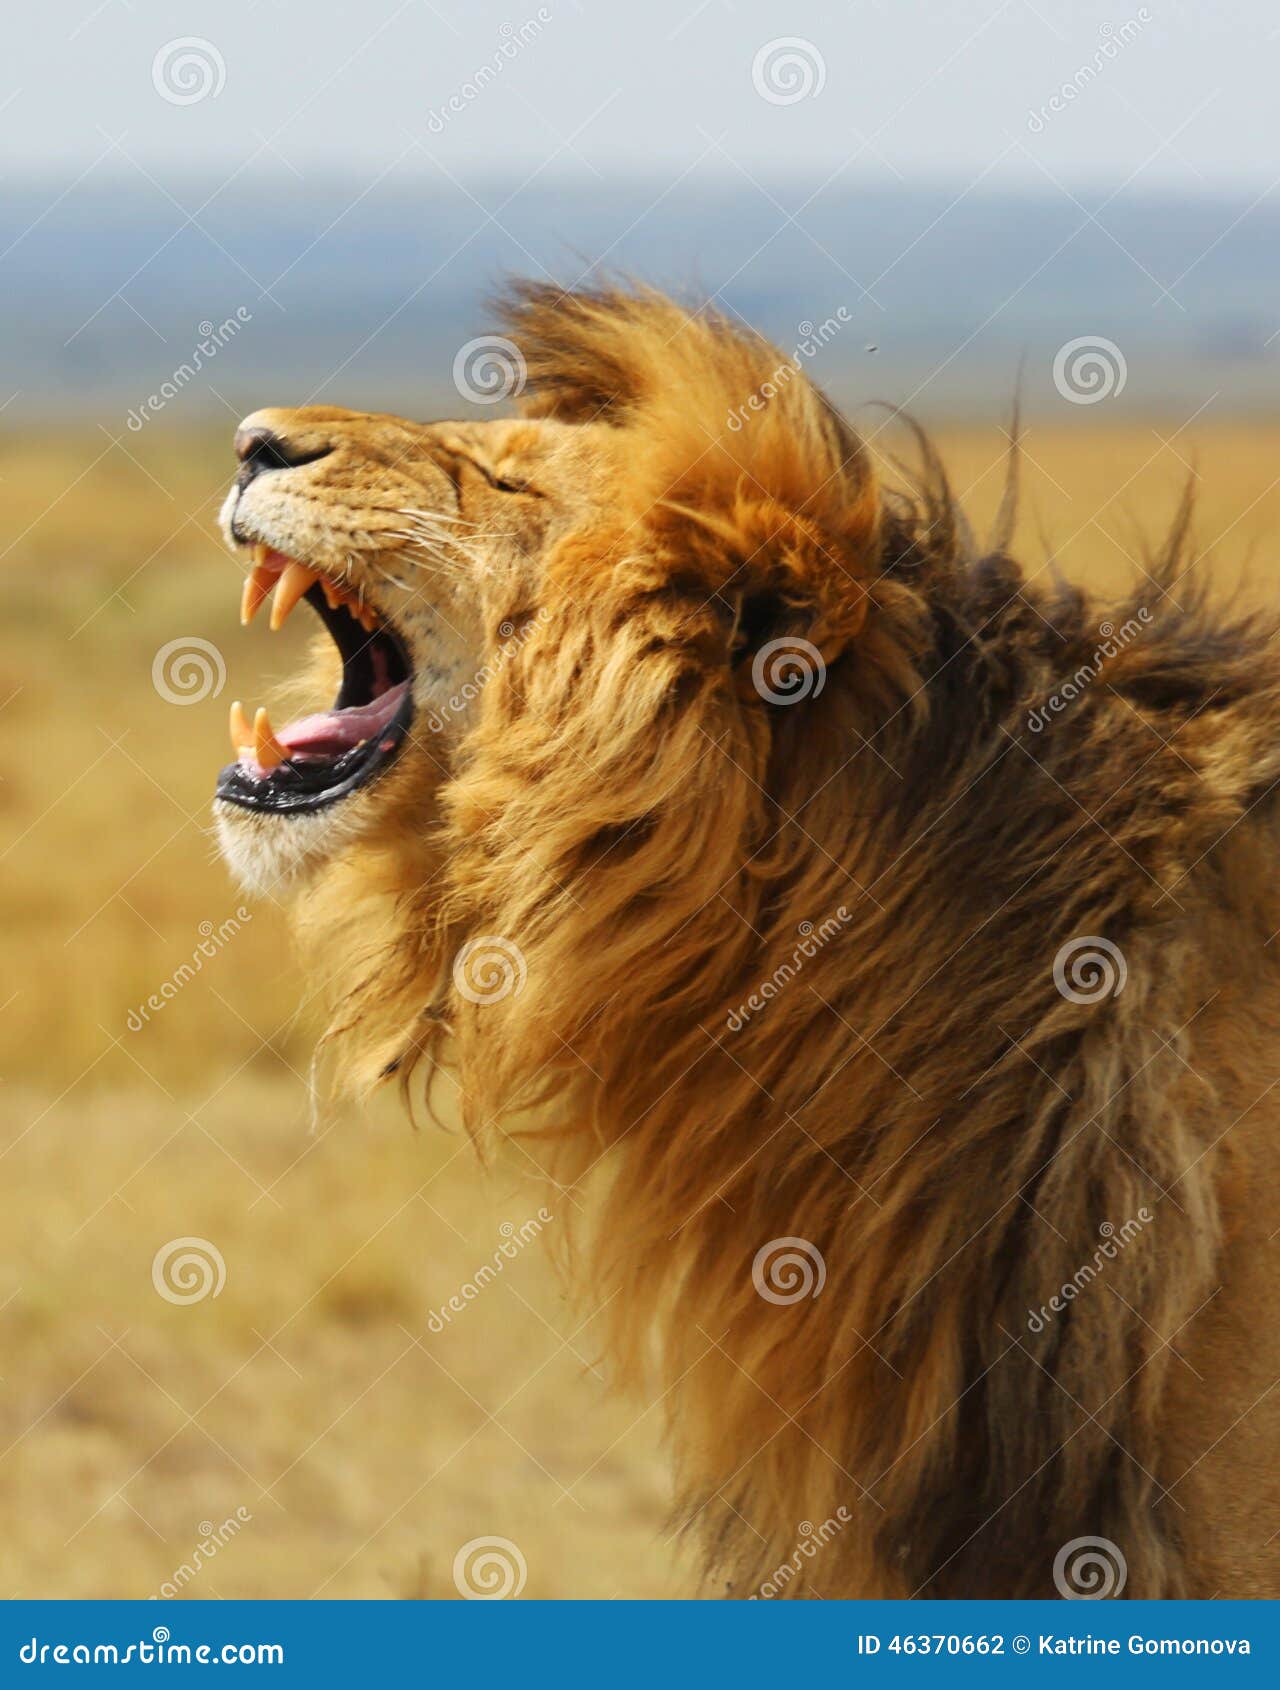 lion, leo africa kenya safari national park wild animals